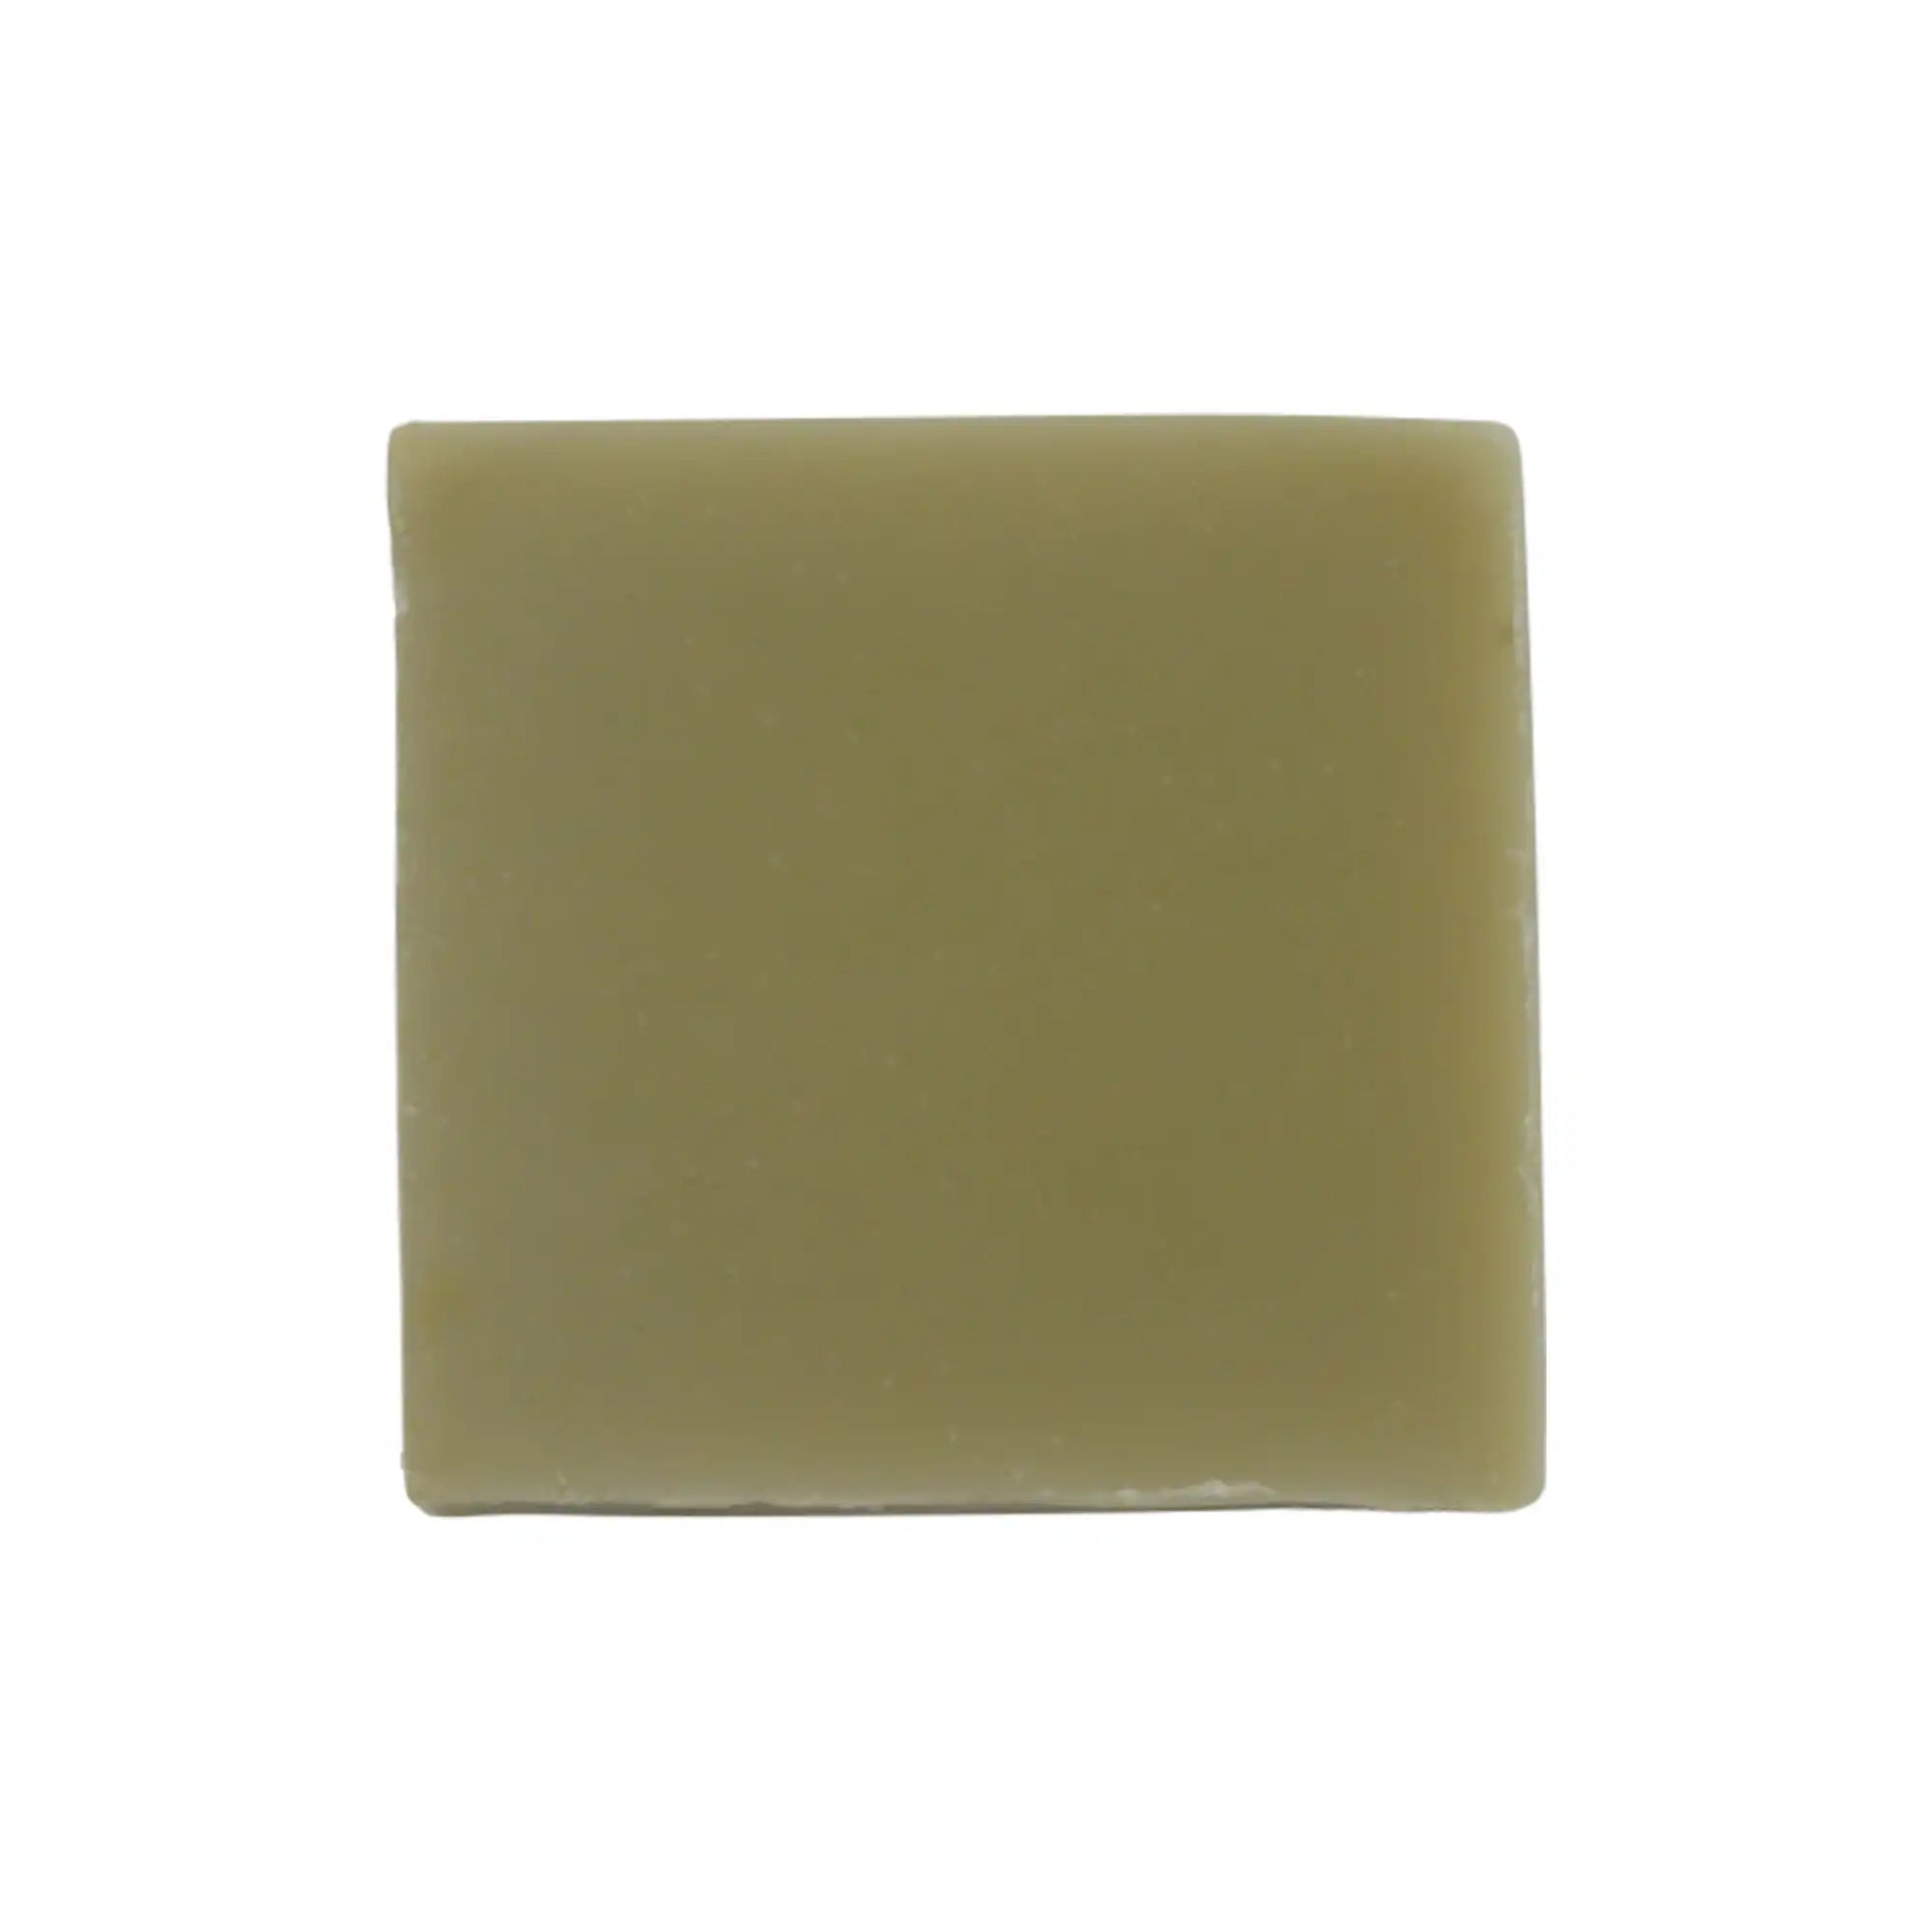 Natural Green Tea Lemongrass Calming Soap